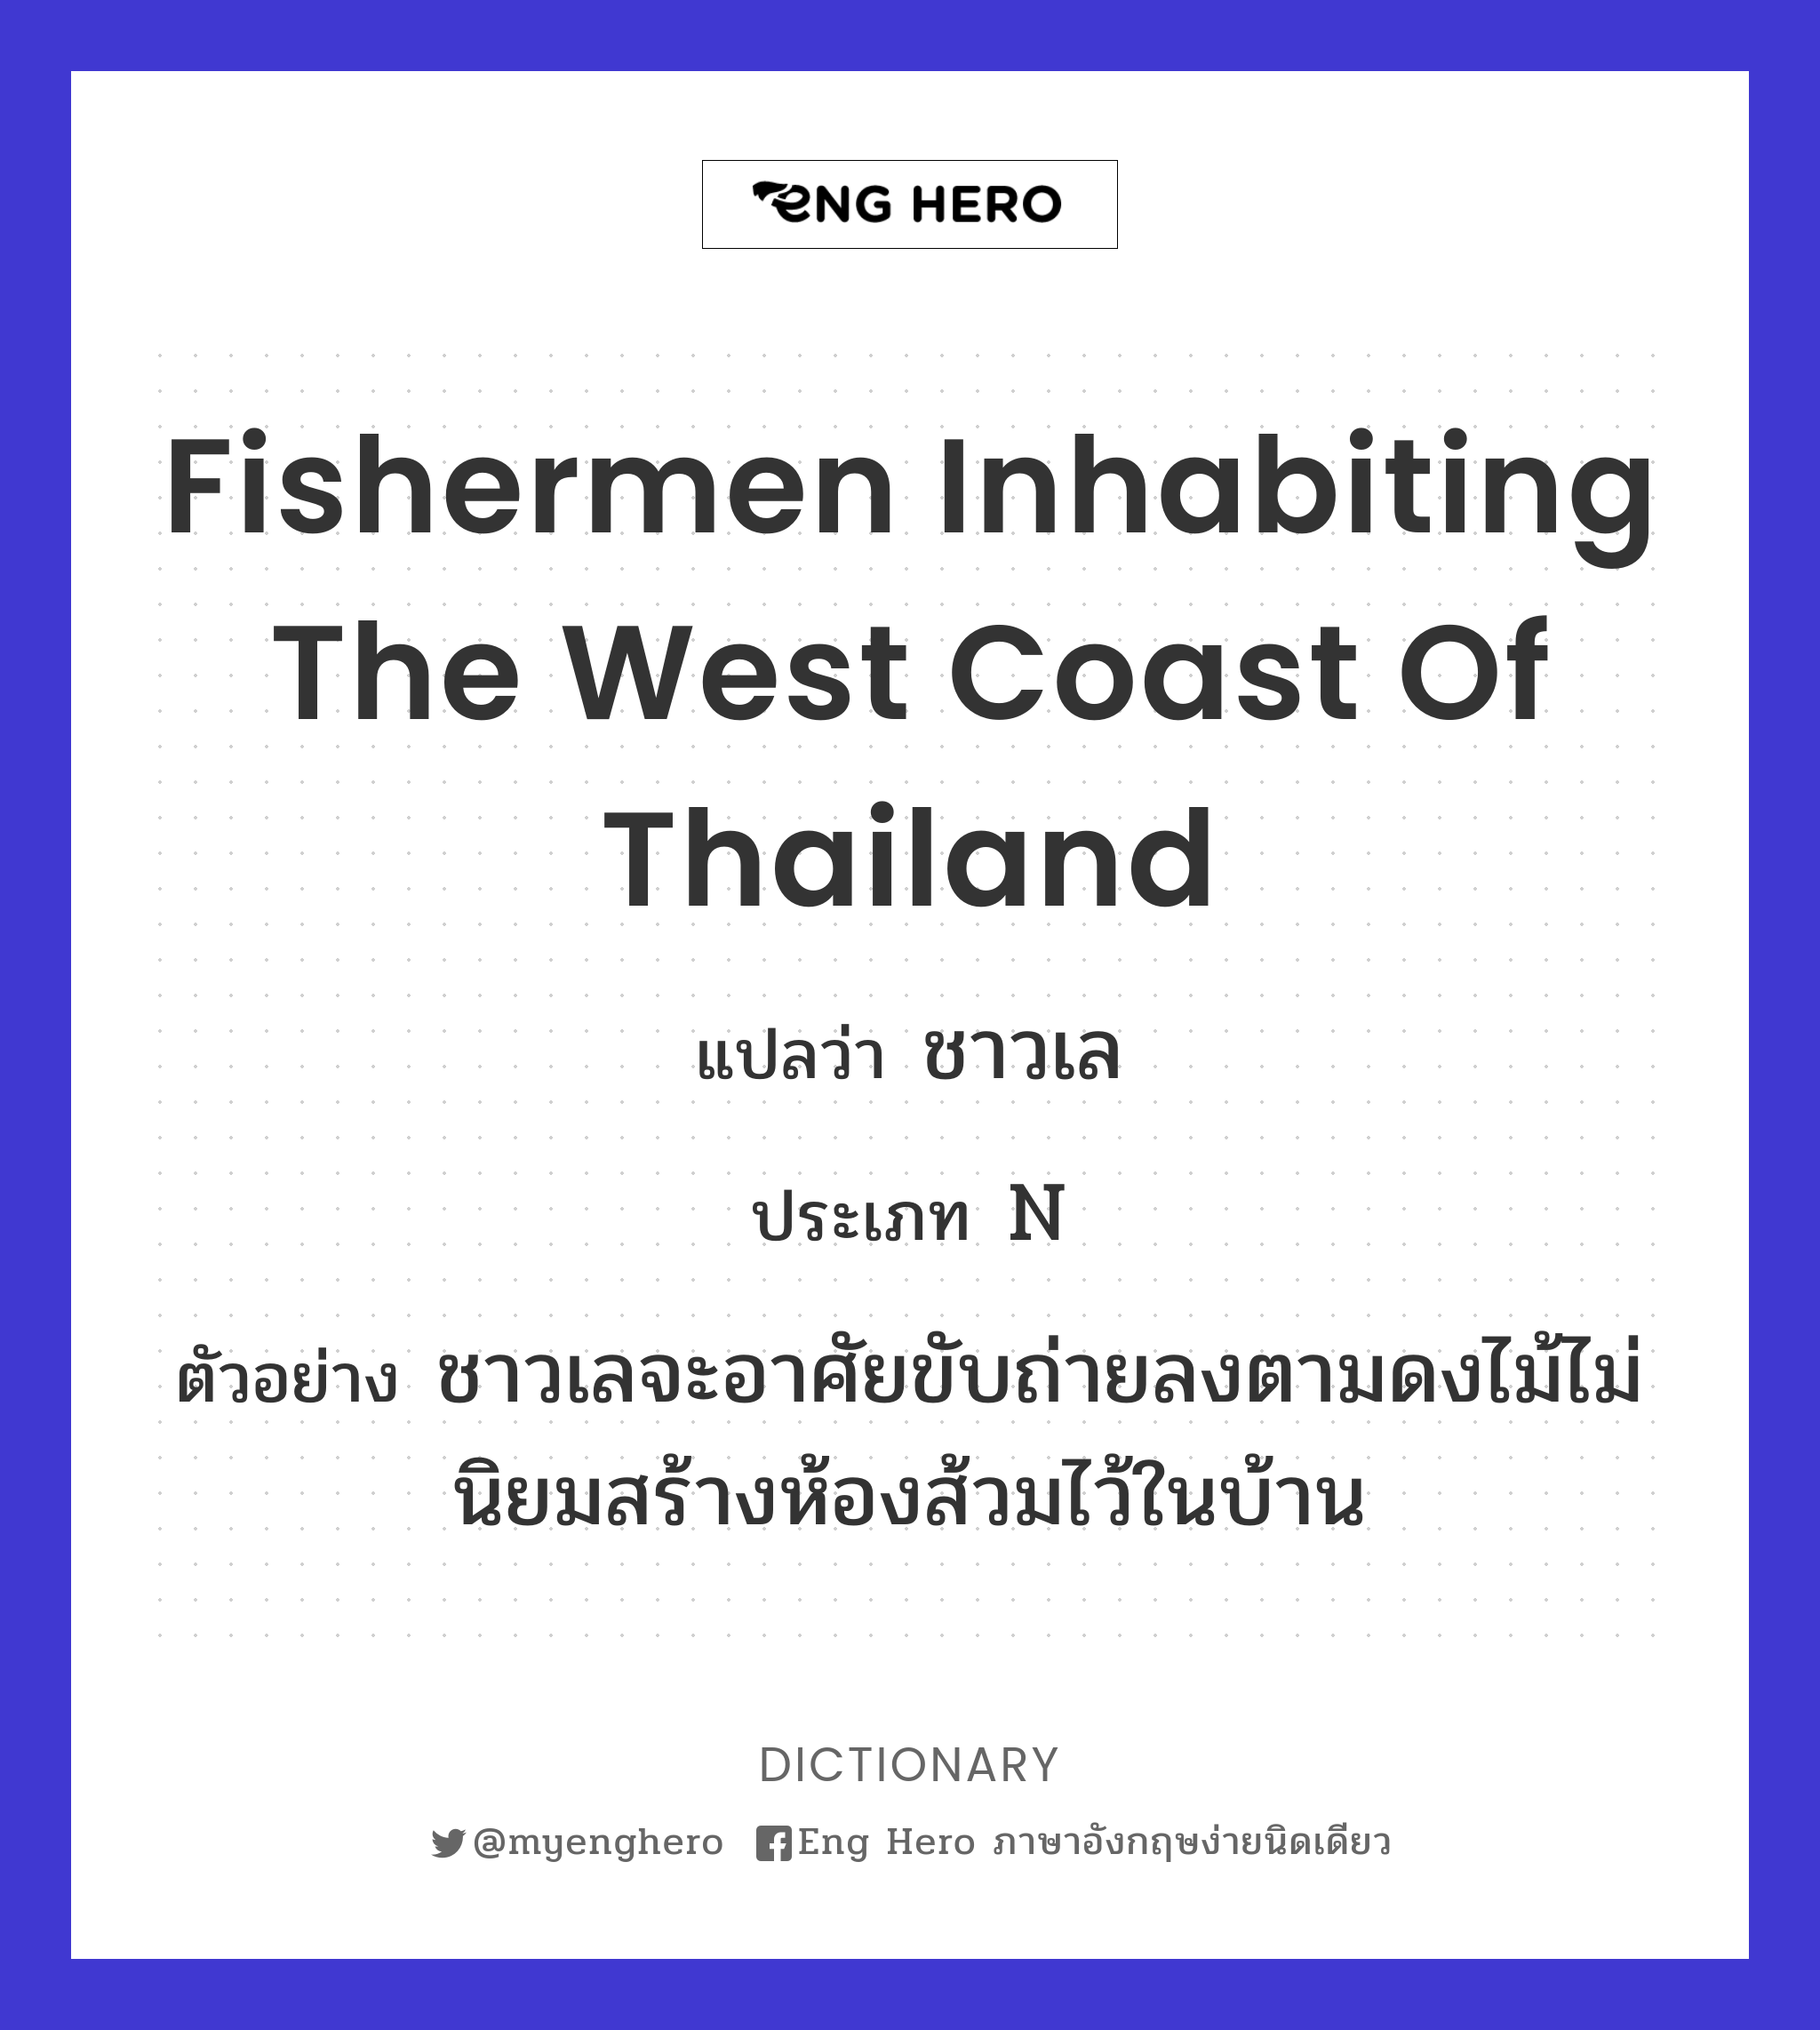 fishermen inhabiting the west coast of Thailand